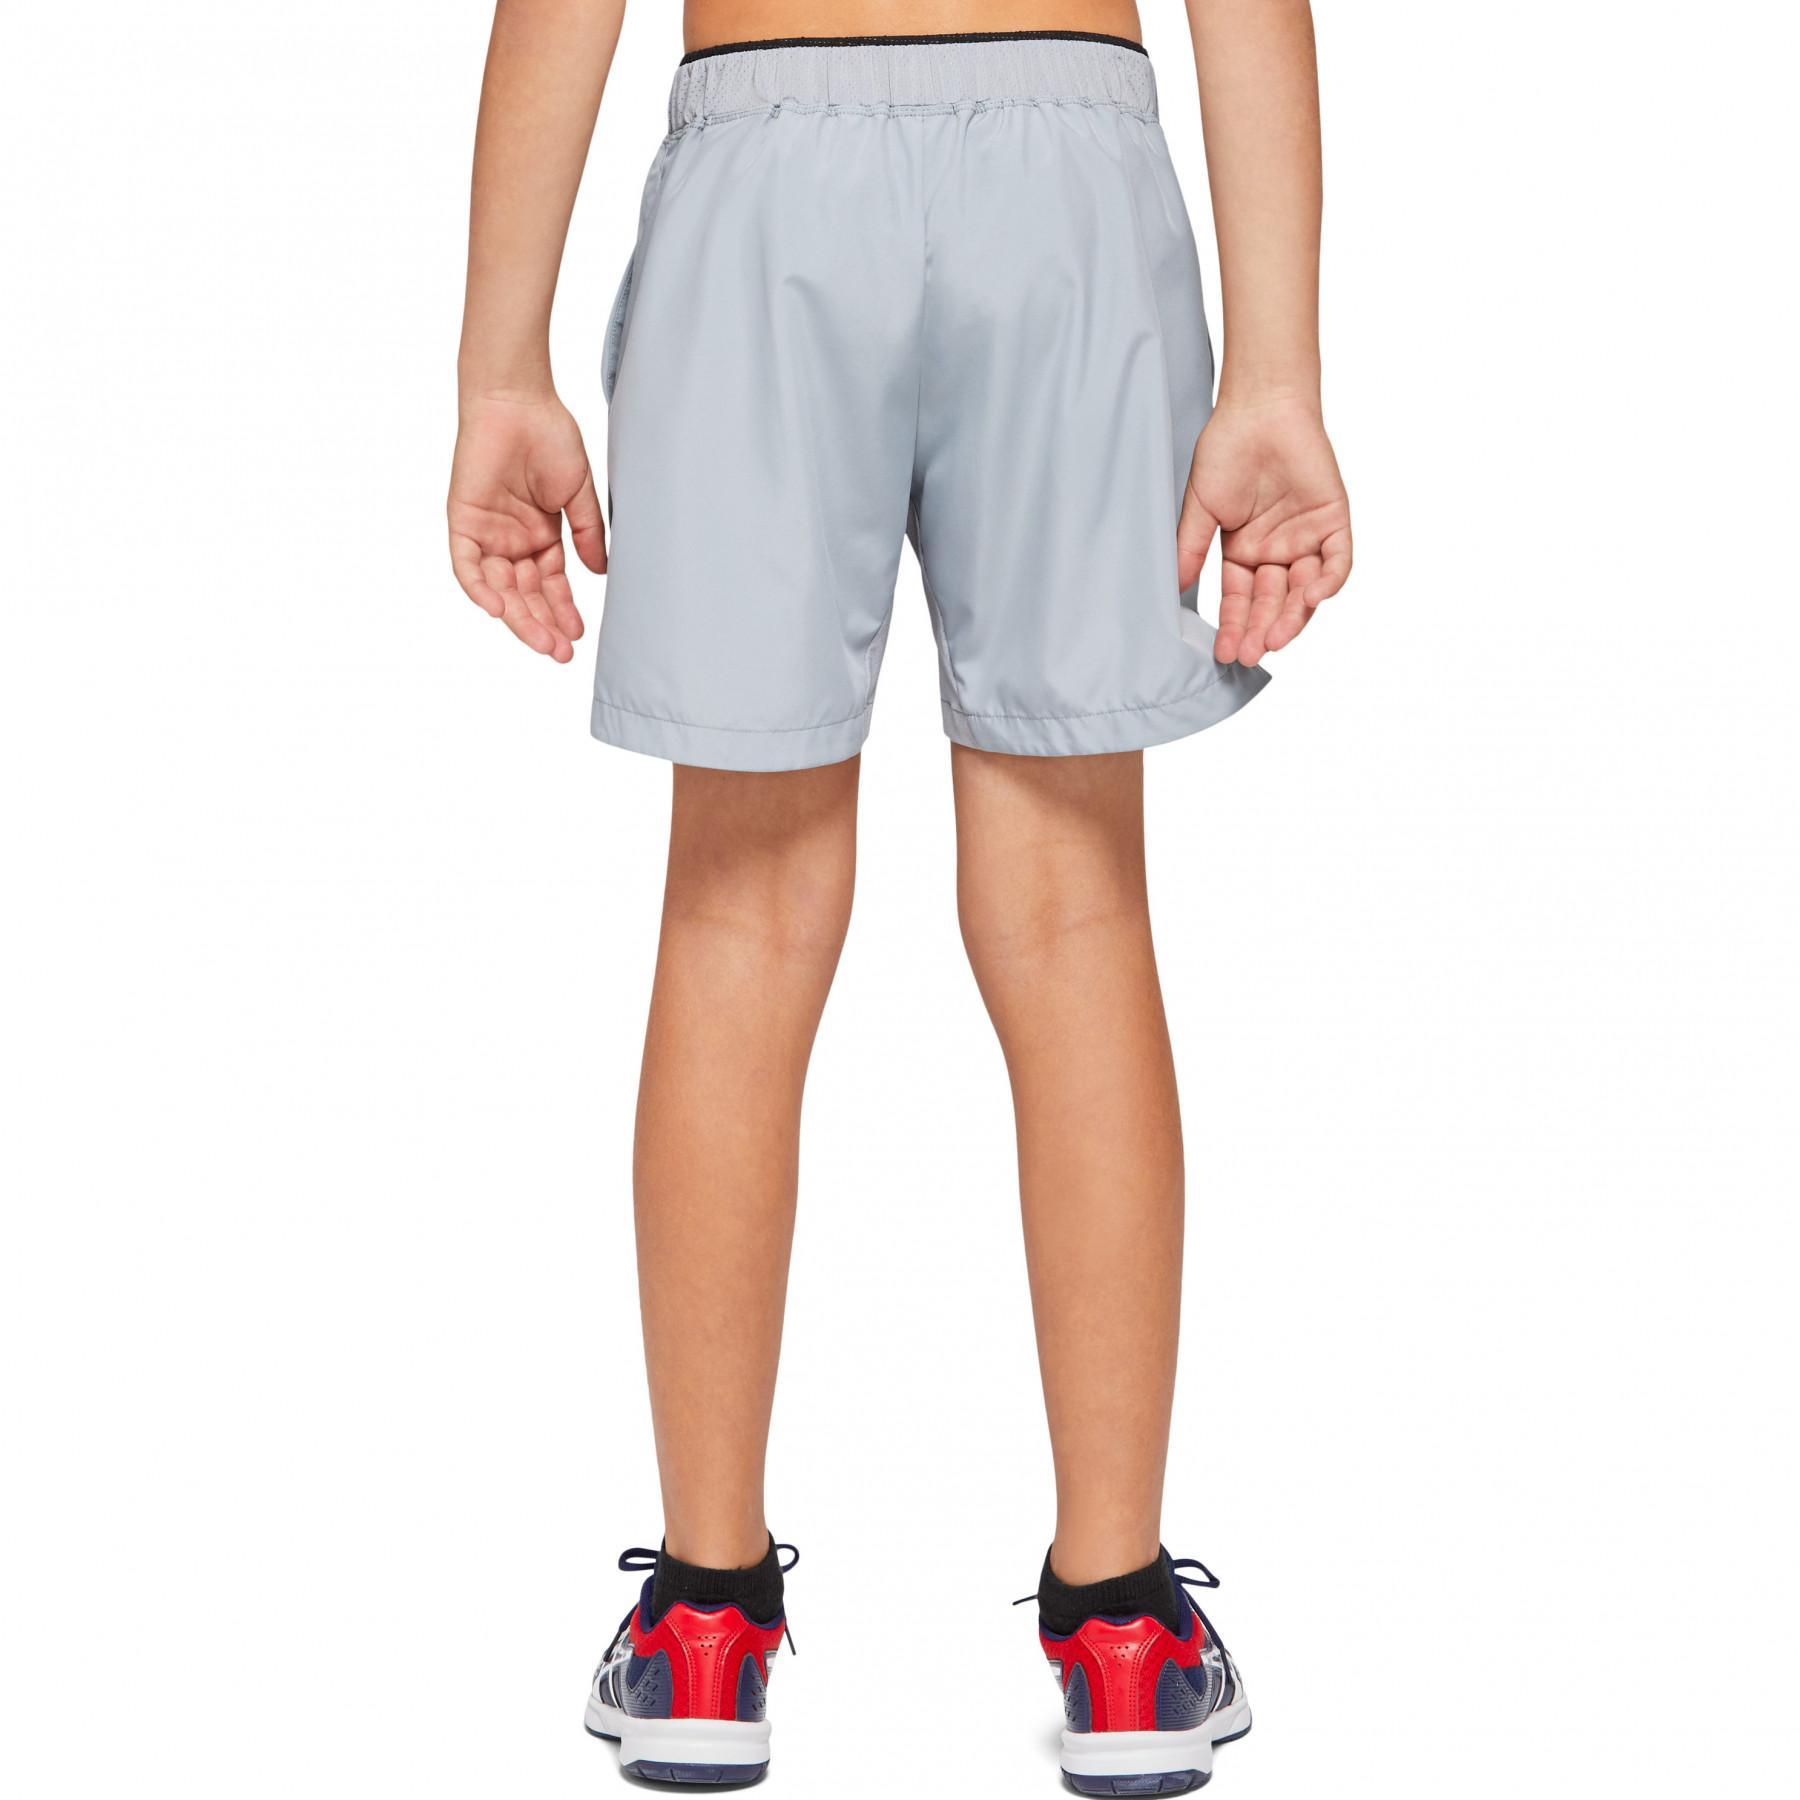 Kinder shorts Asics Tennis